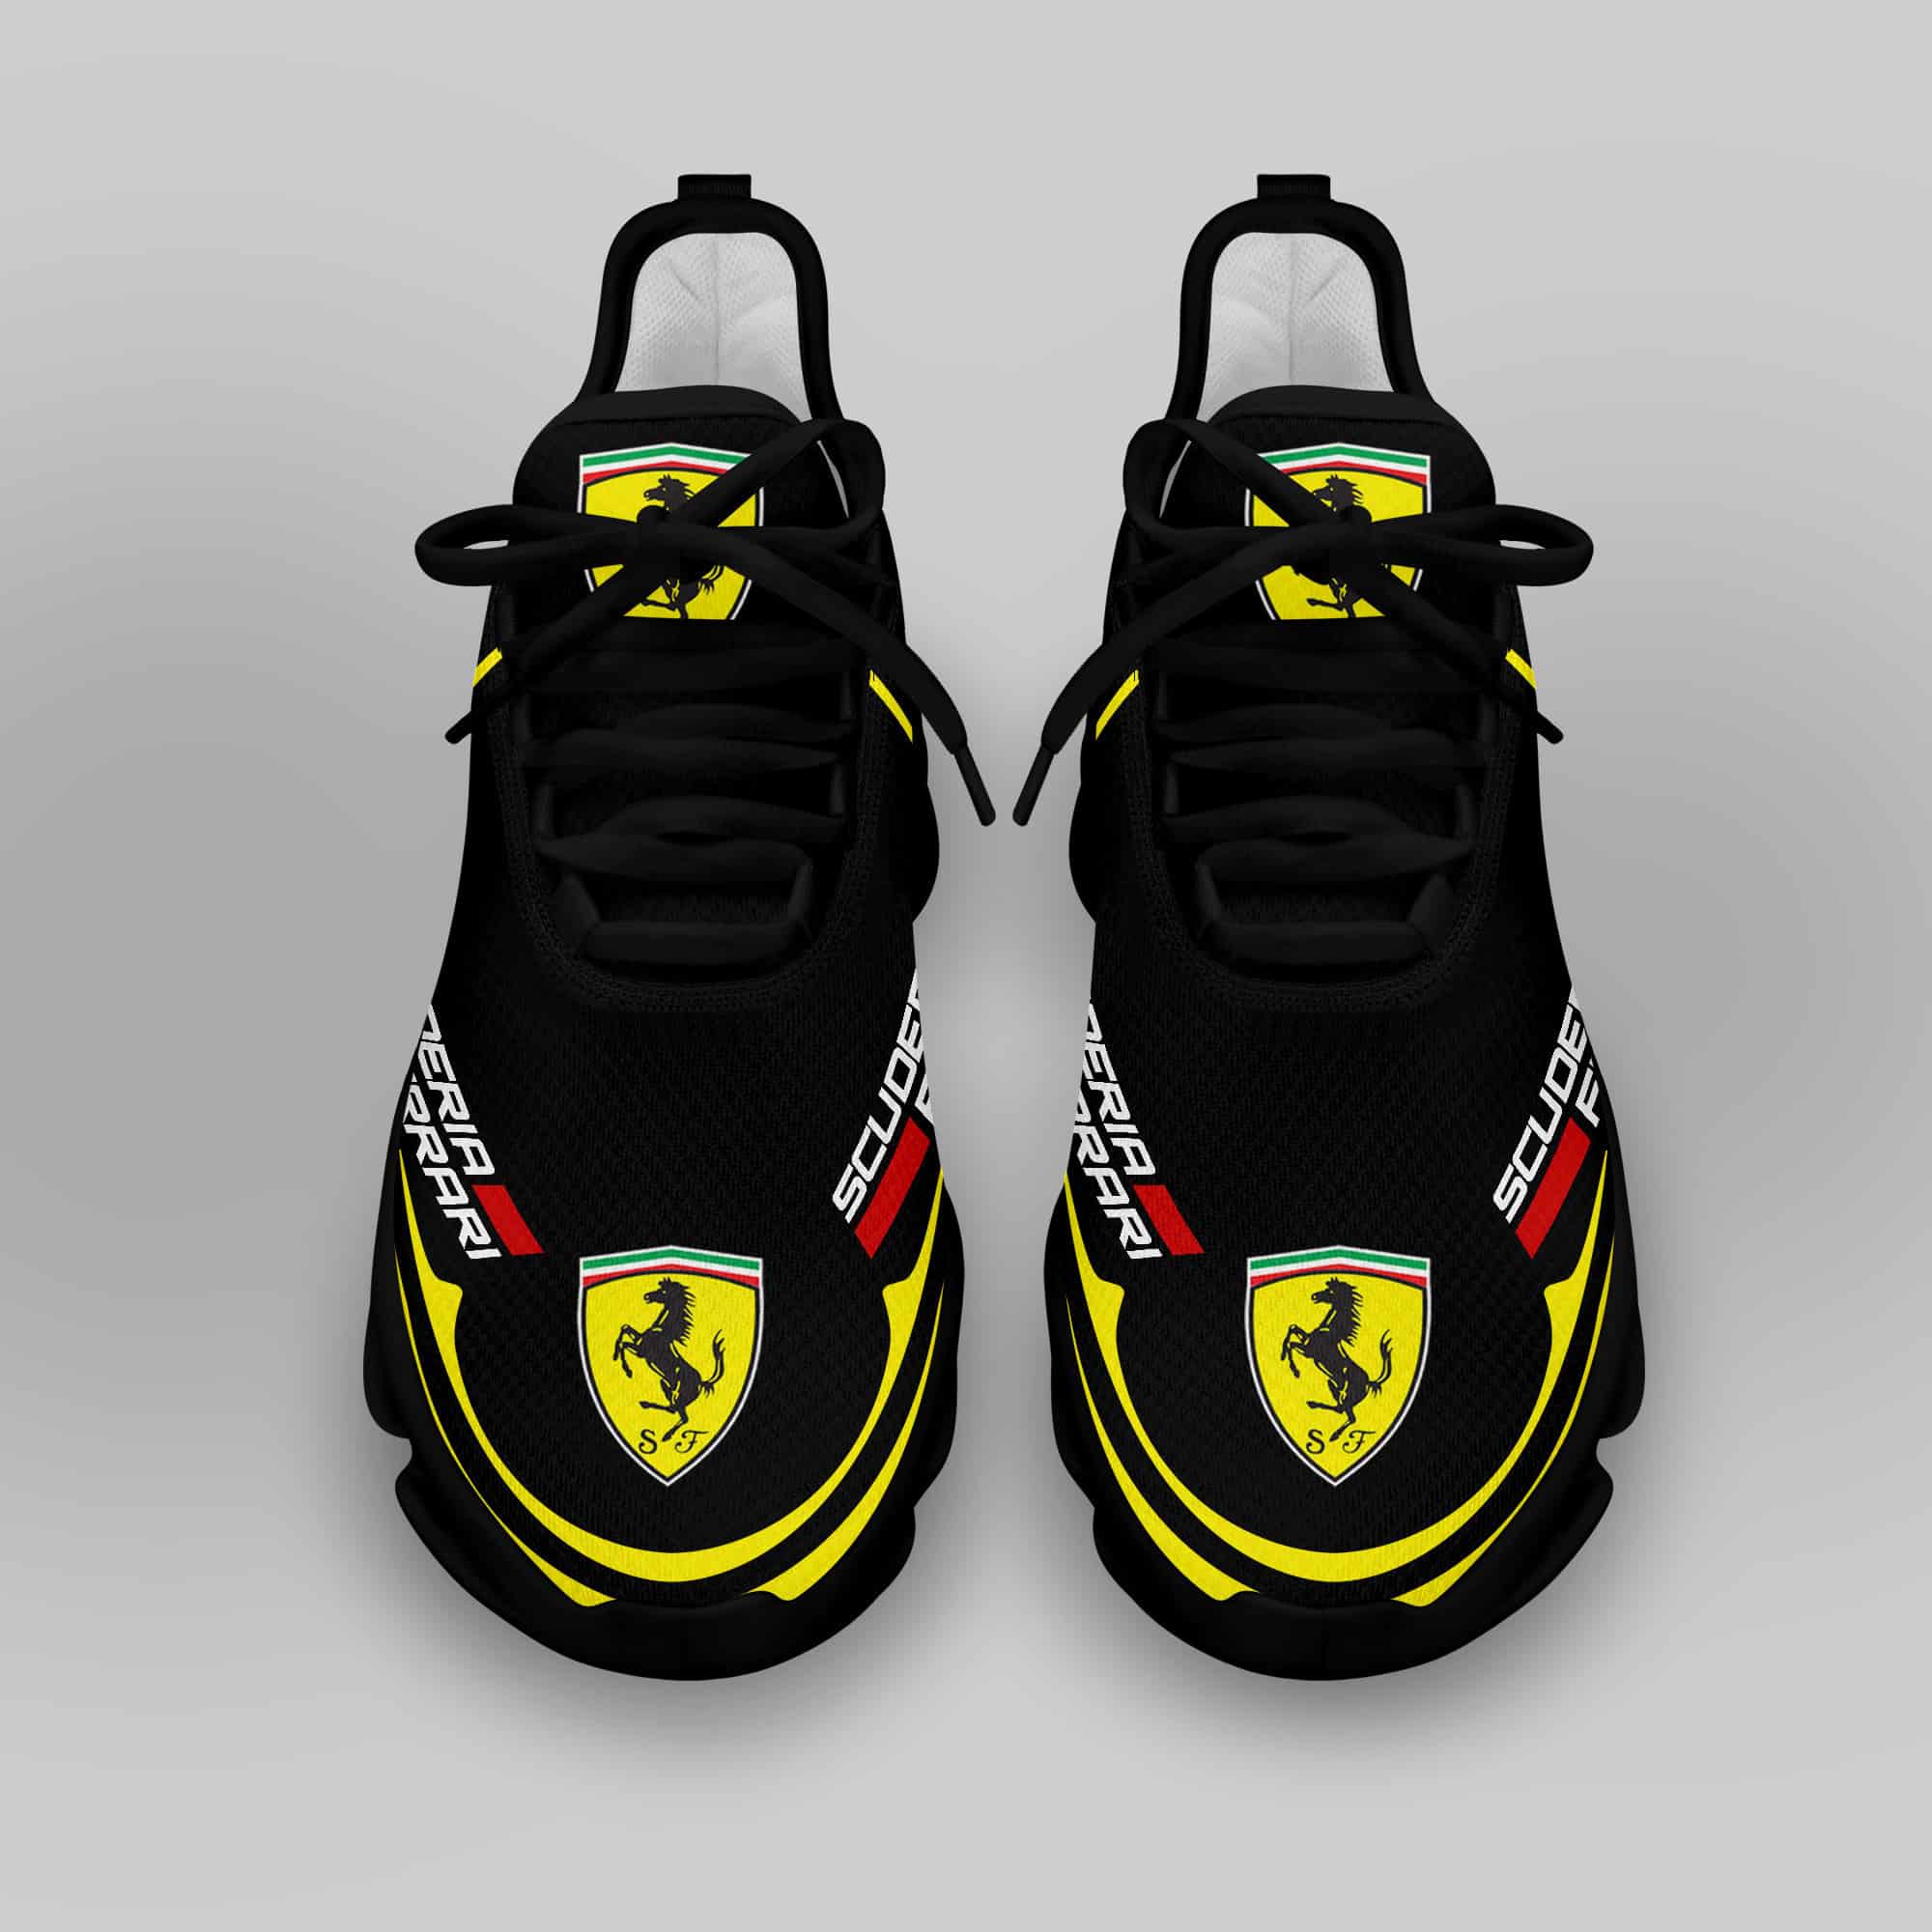 Ferrari Sneaker Running Shoes Max Soul Shoes Sneakers Ver 26 4